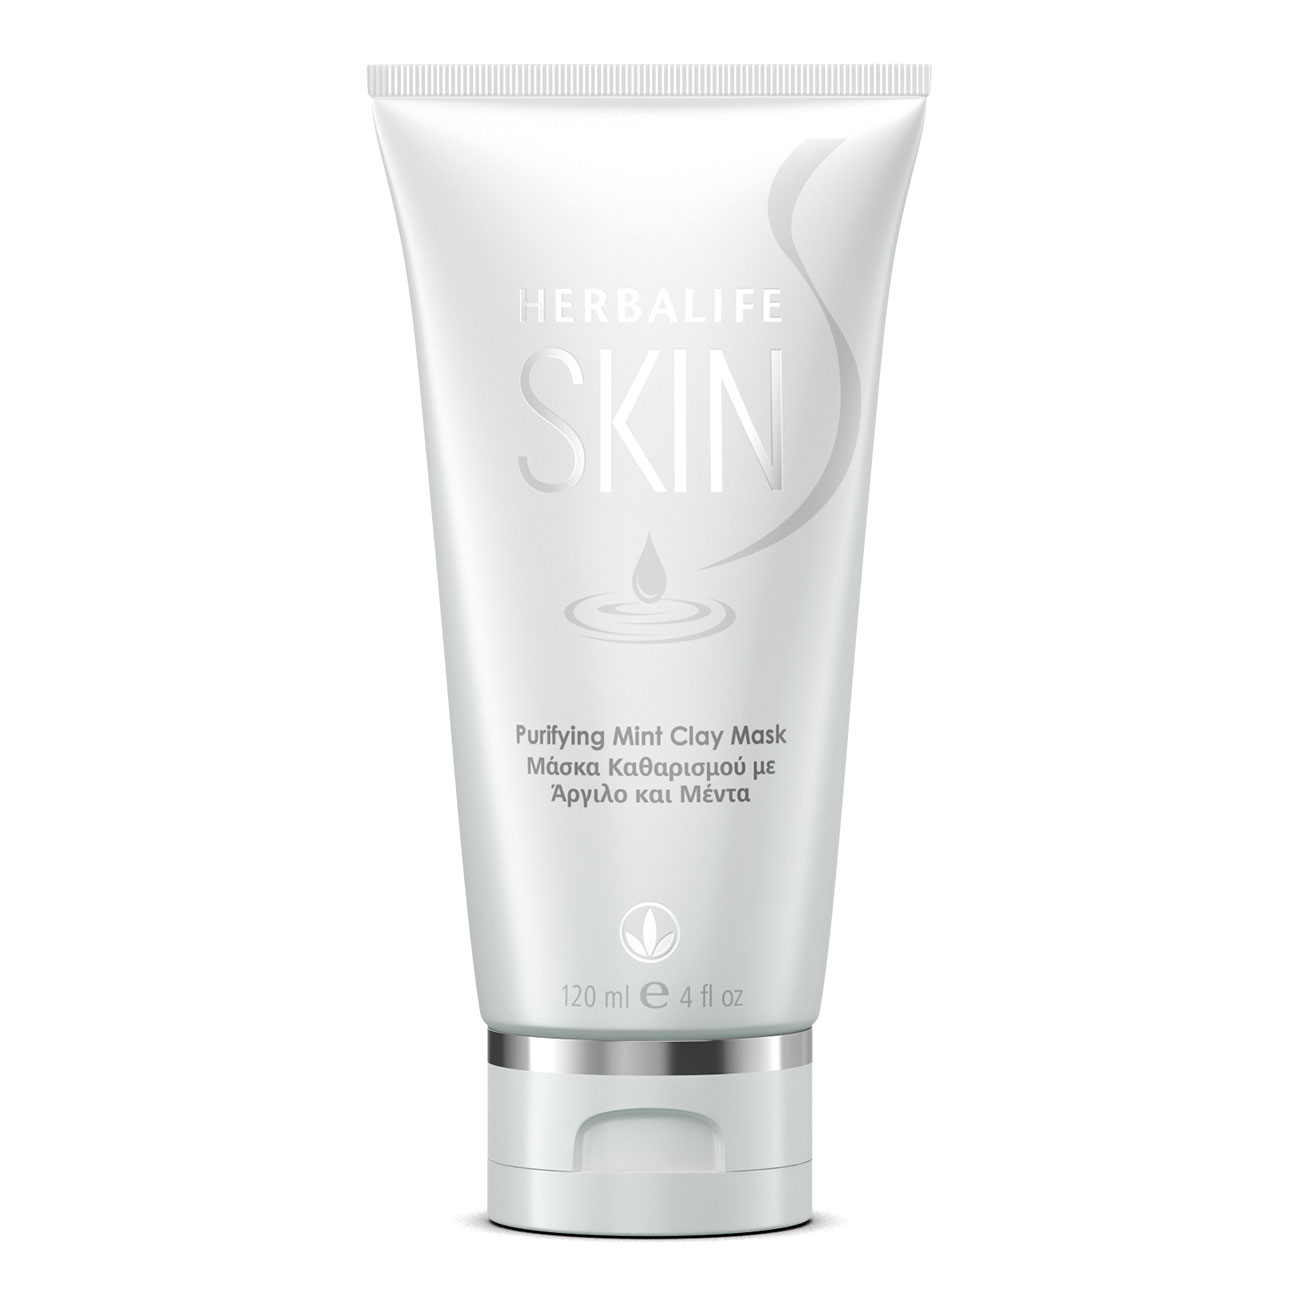 Herbalife Skin Μάσκα Καθαρισμού με Άργιλο & Μέντα  product shot.